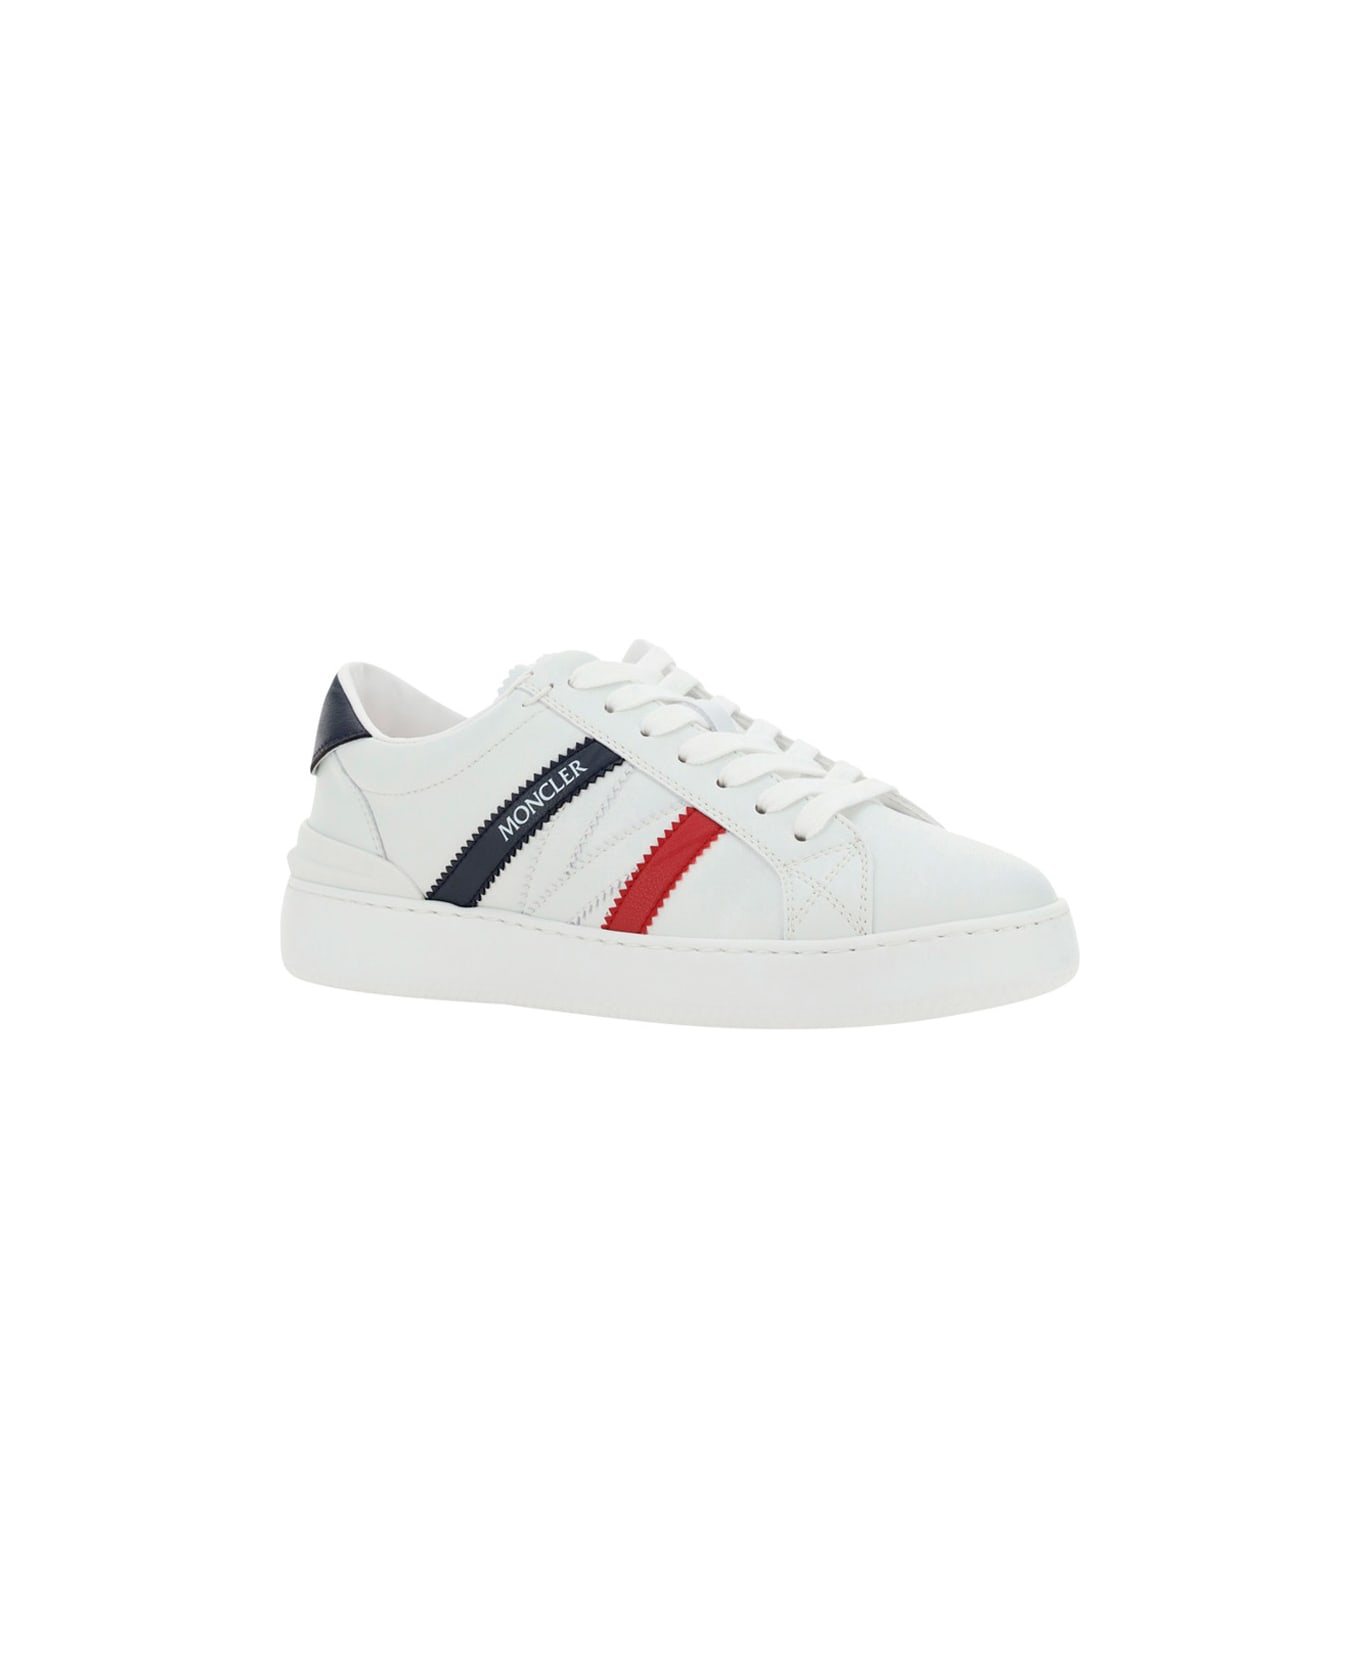 Moncler Monaco Sneaker - White, red, blue